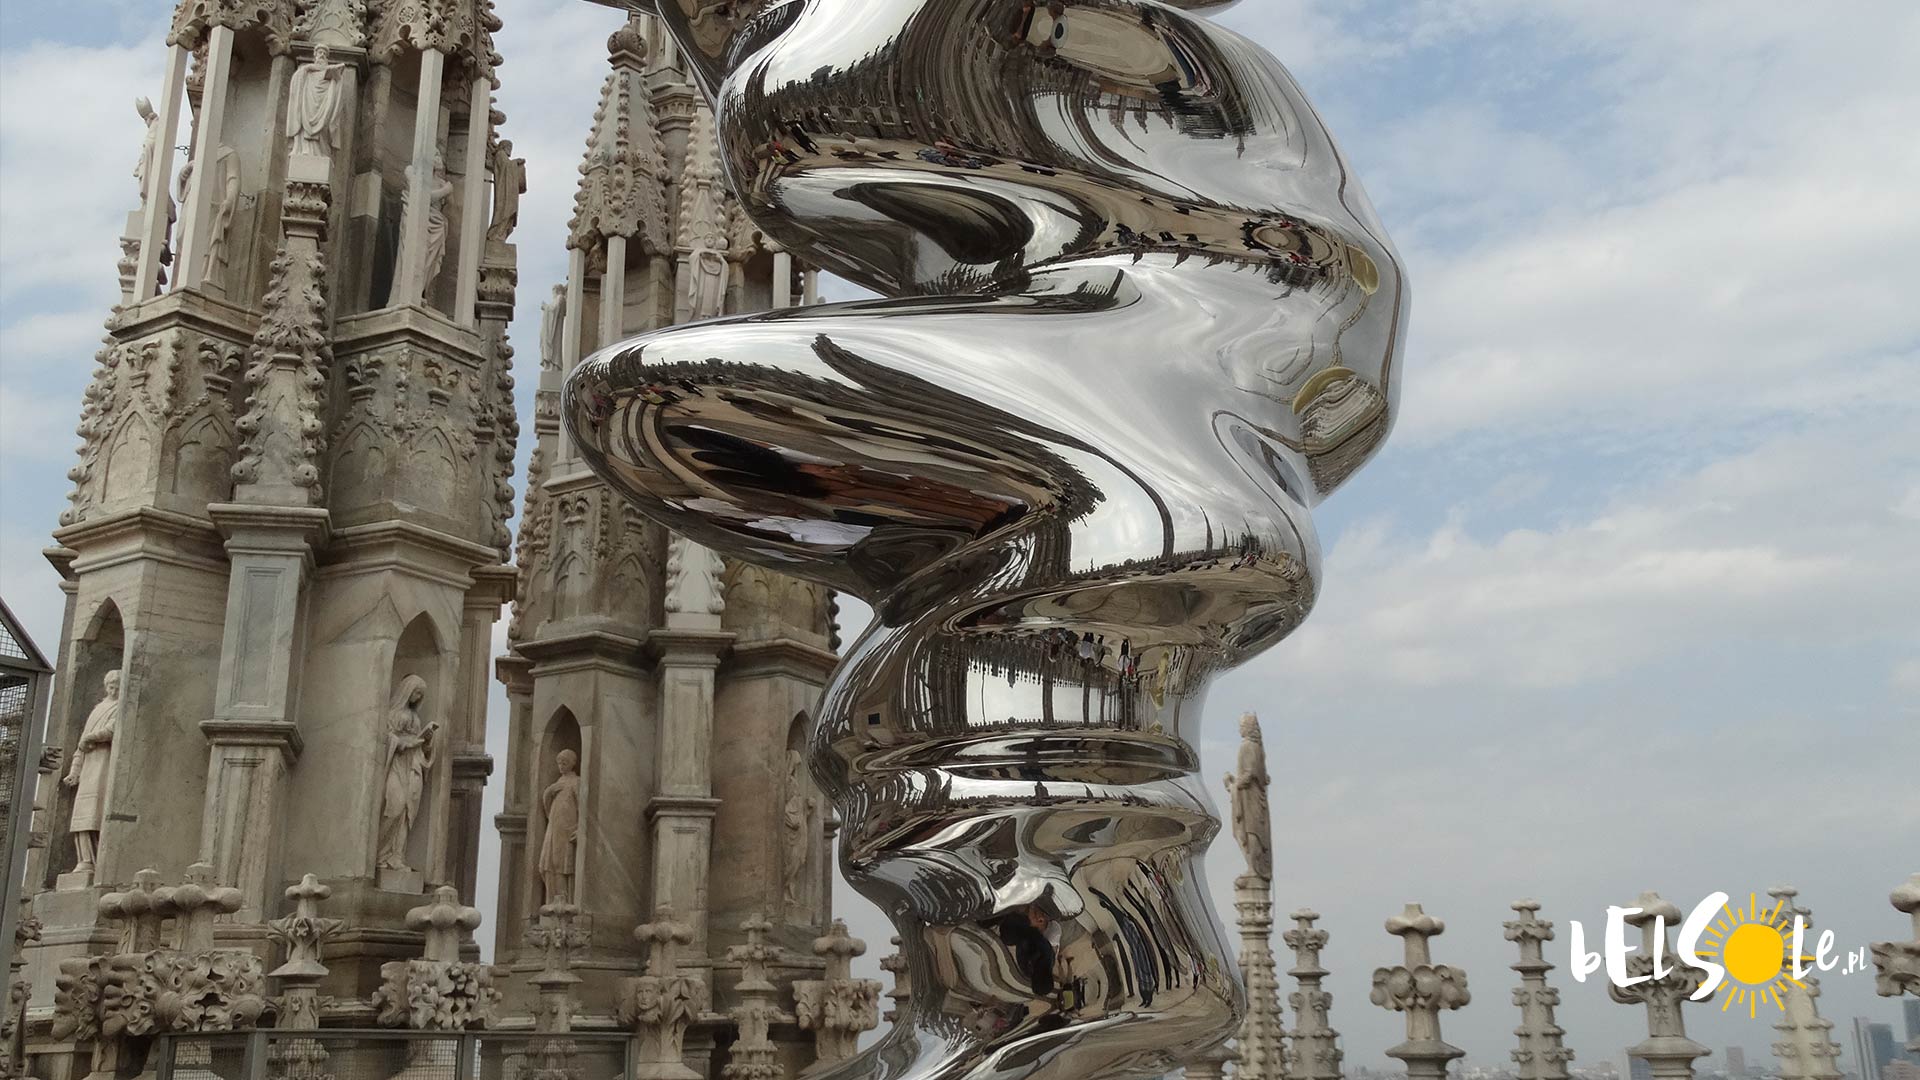 Roof of Duomo Milano art